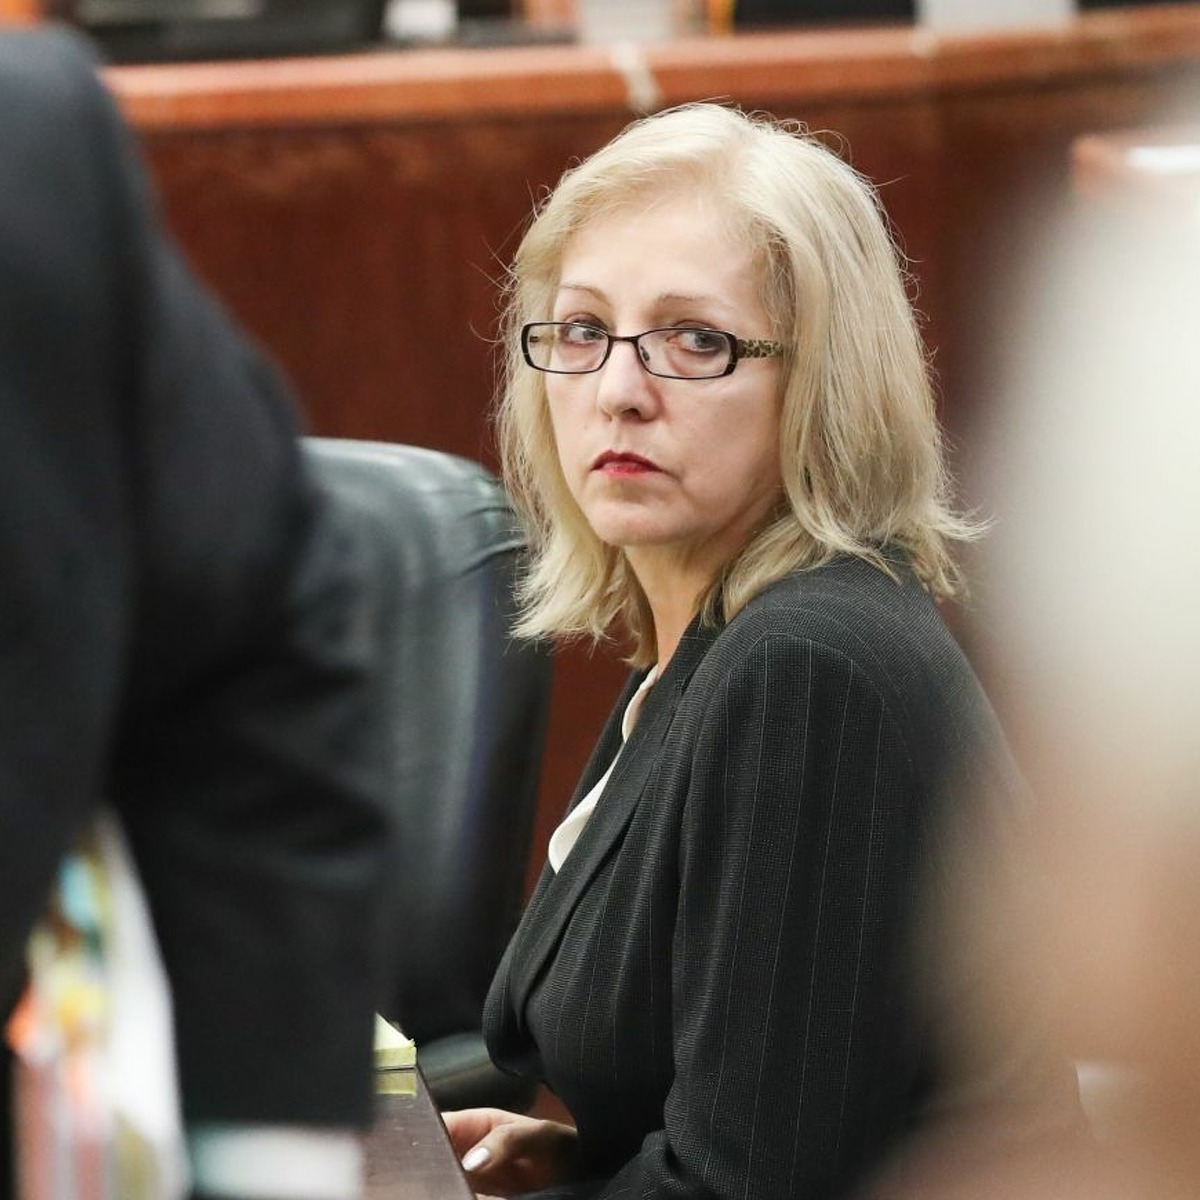 Sandra Melgar stands trial for murder